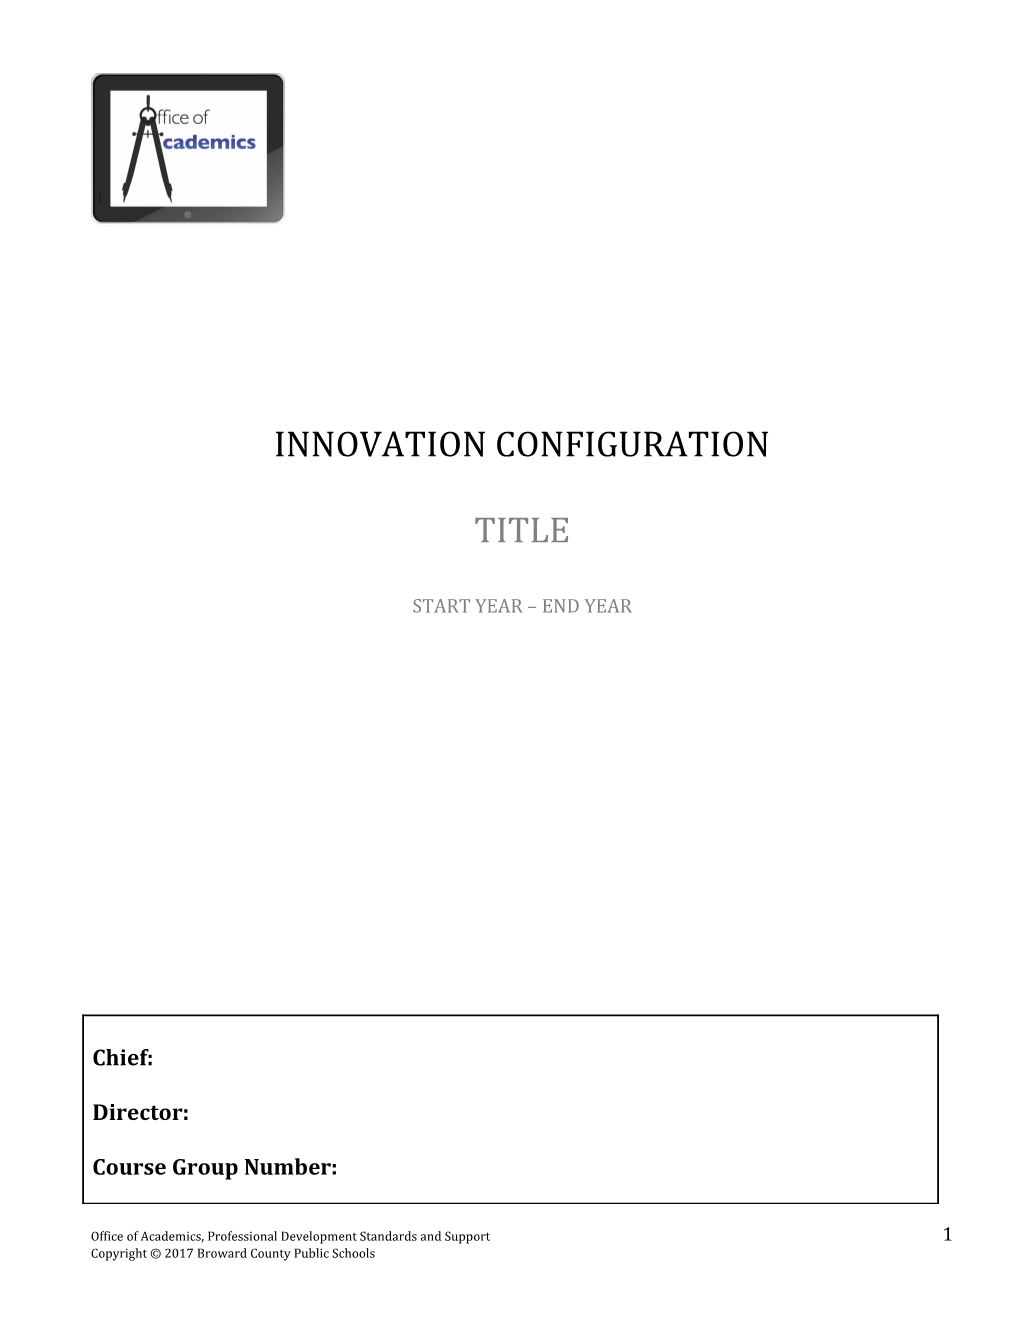 Innovation Configuration